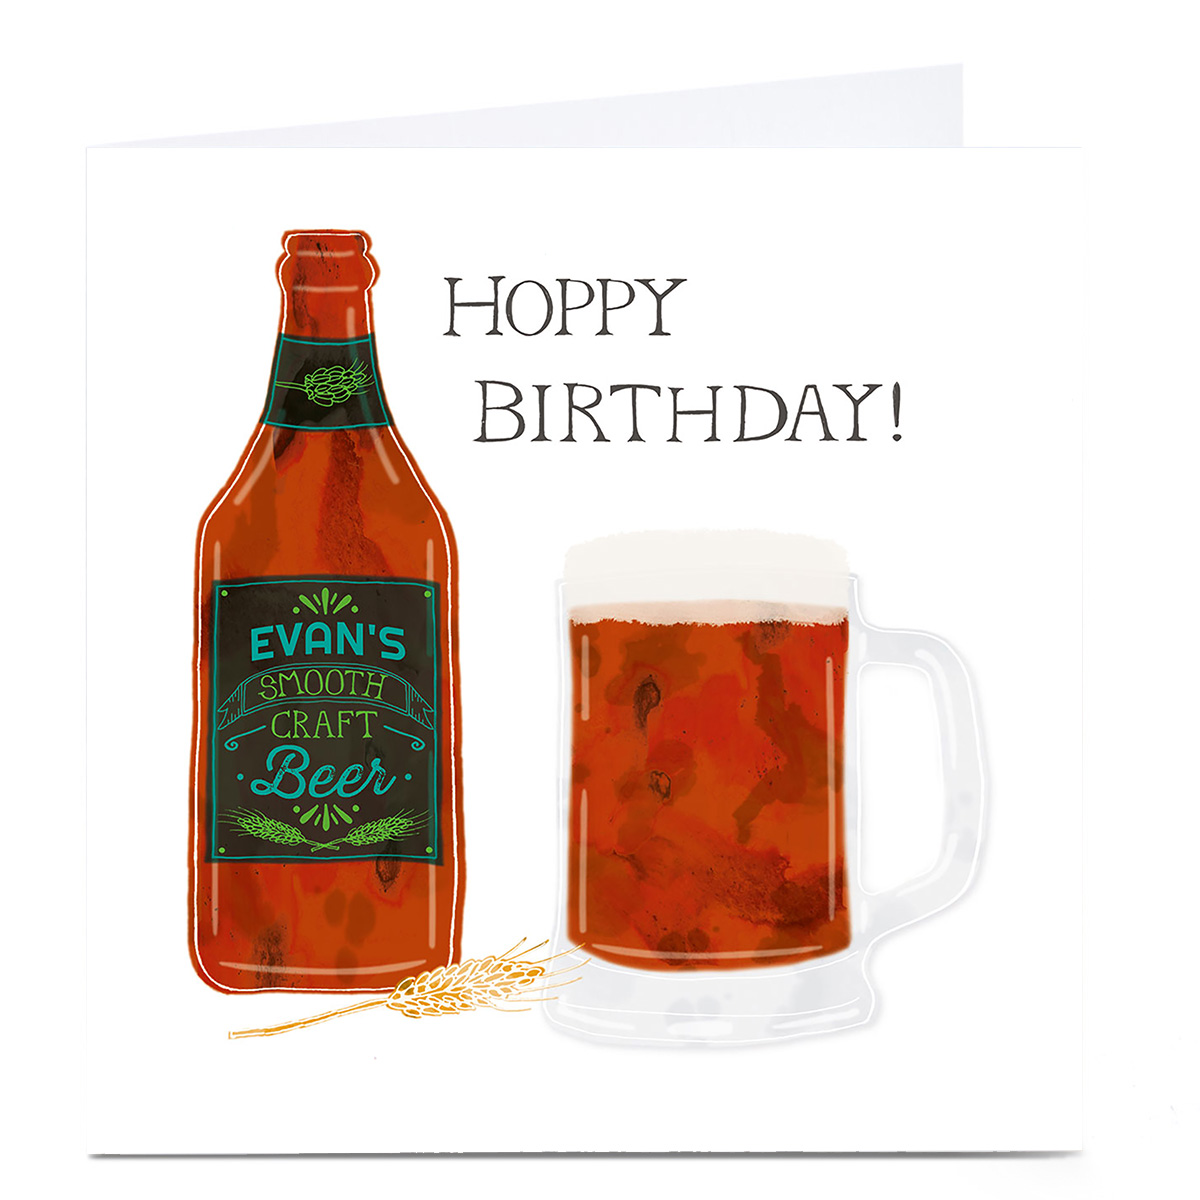 Personalised Birthday Card - Hoppy Birthday